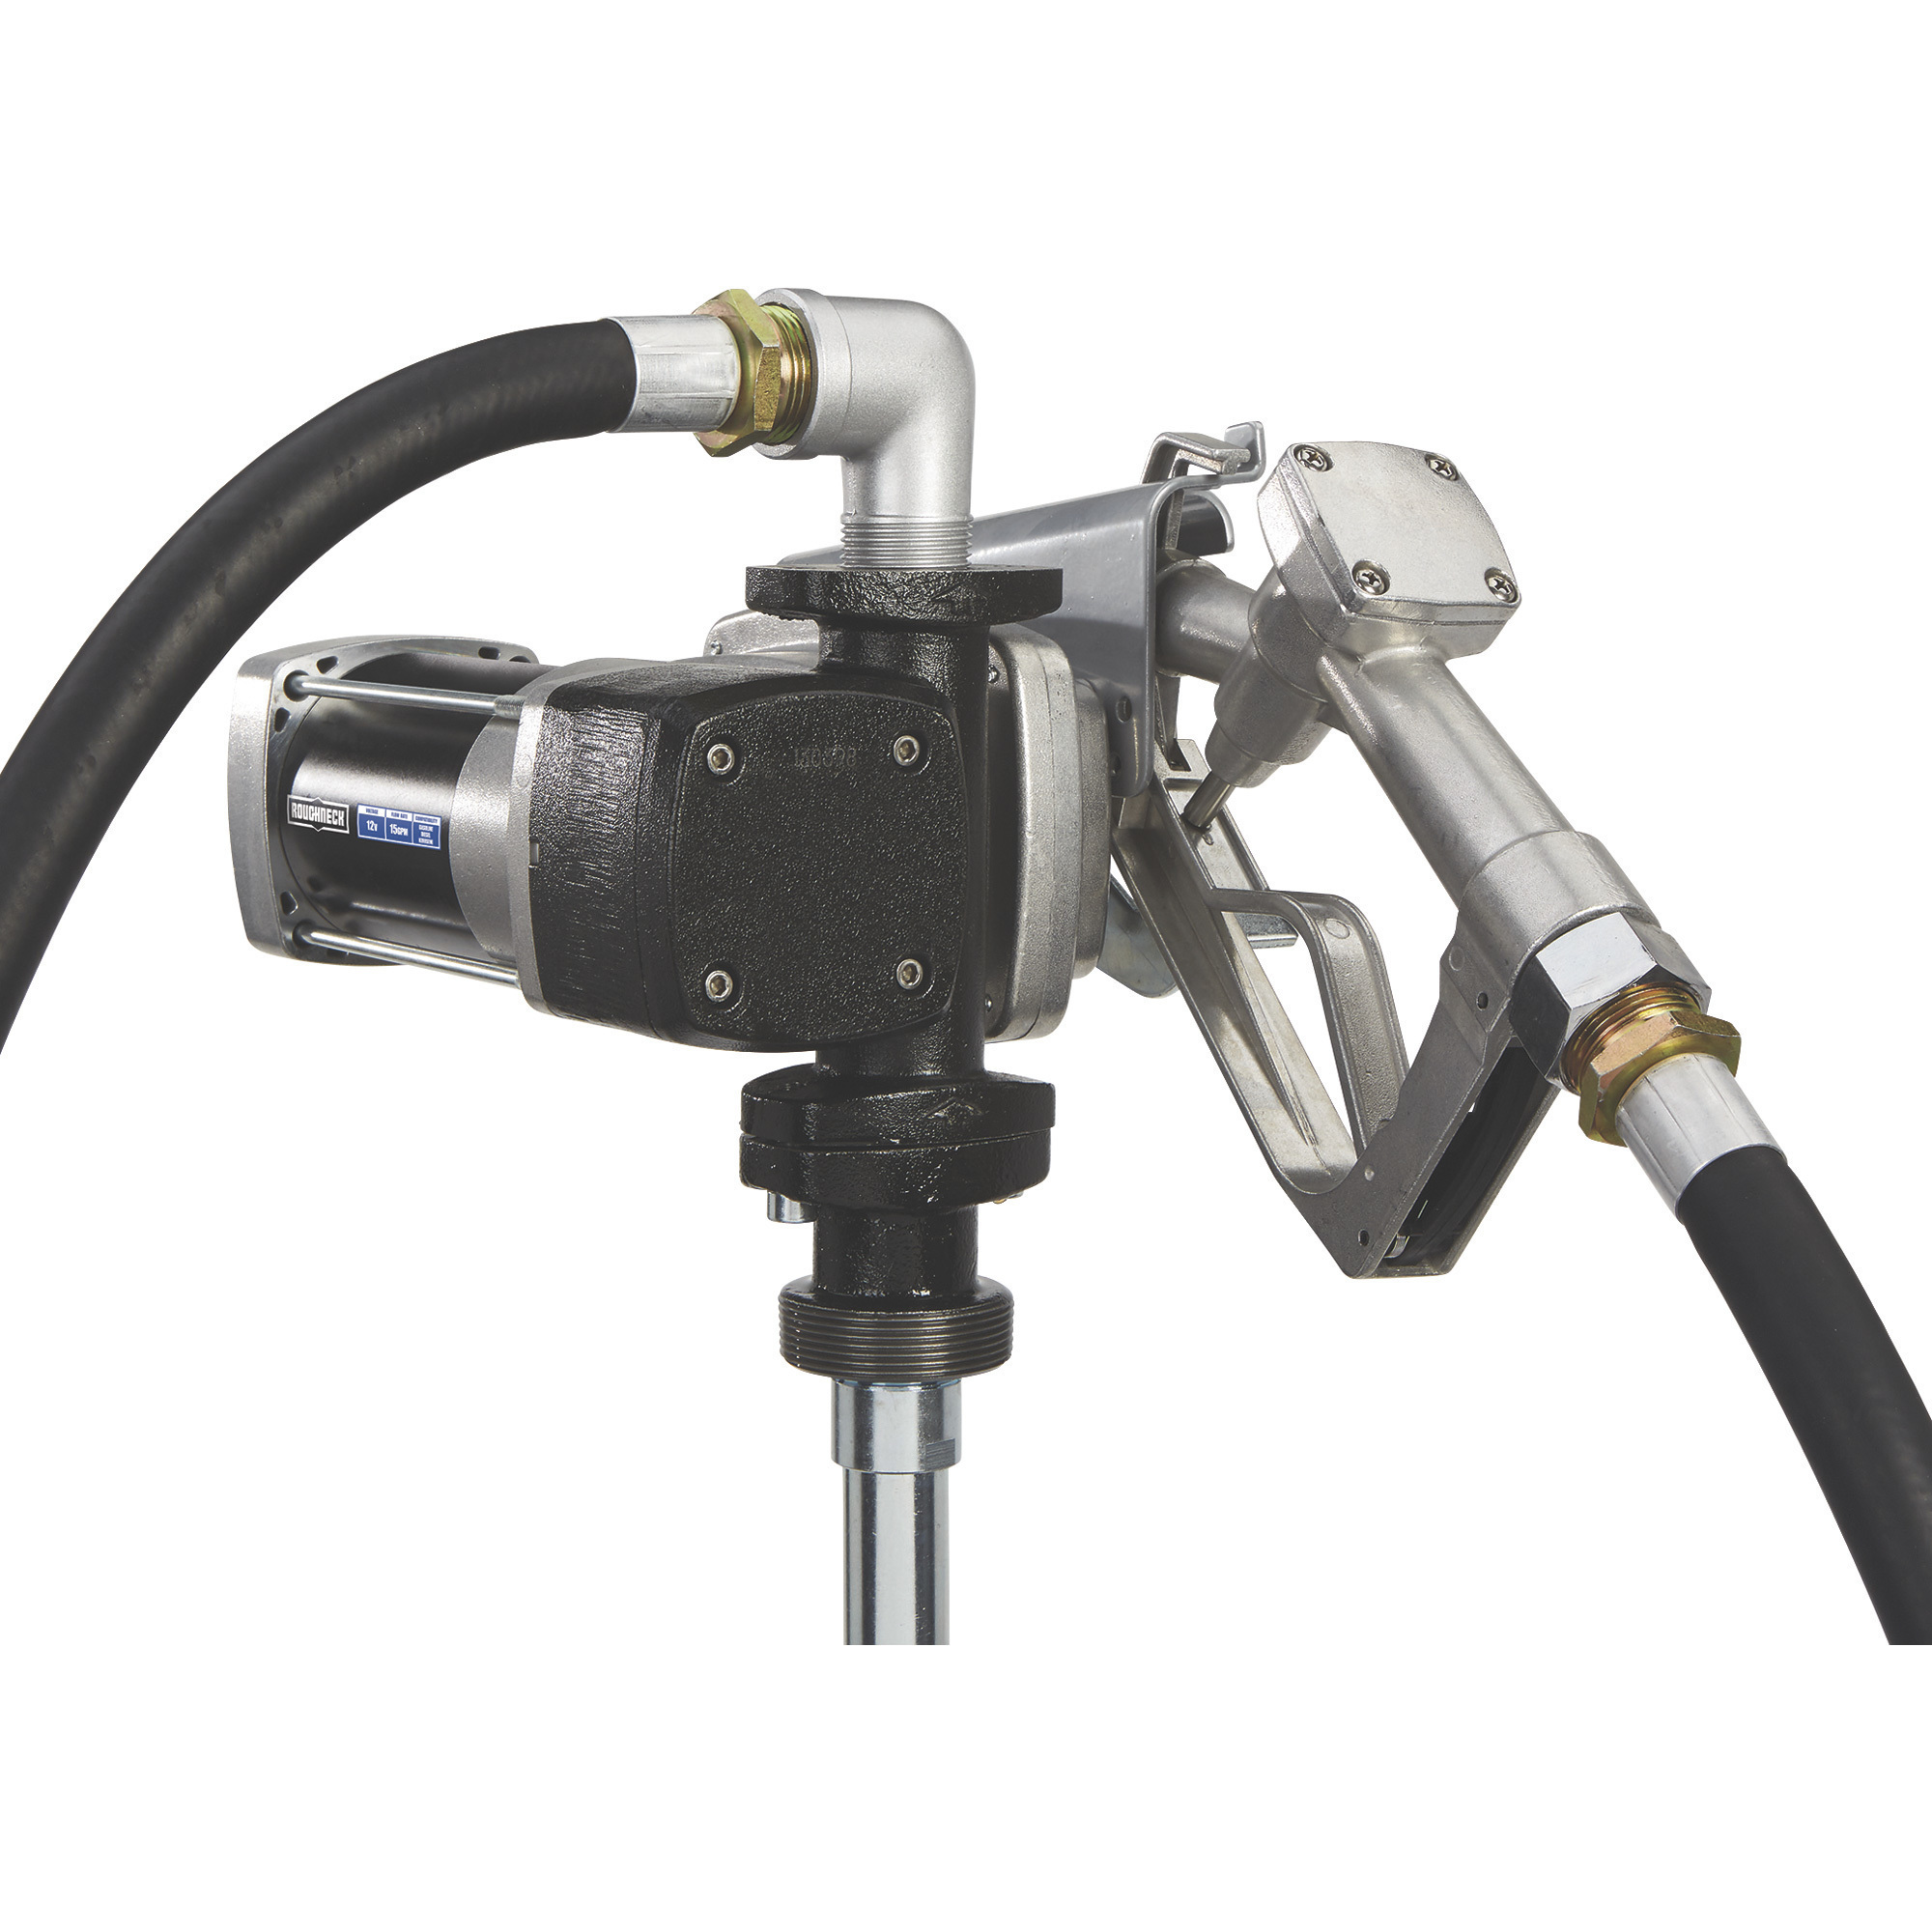 Roughneck Heavy-Duty Fuel Transfer Pump, 15 GPM, 12 Volt DC, Manual Nozzle, Gasoline Compatible